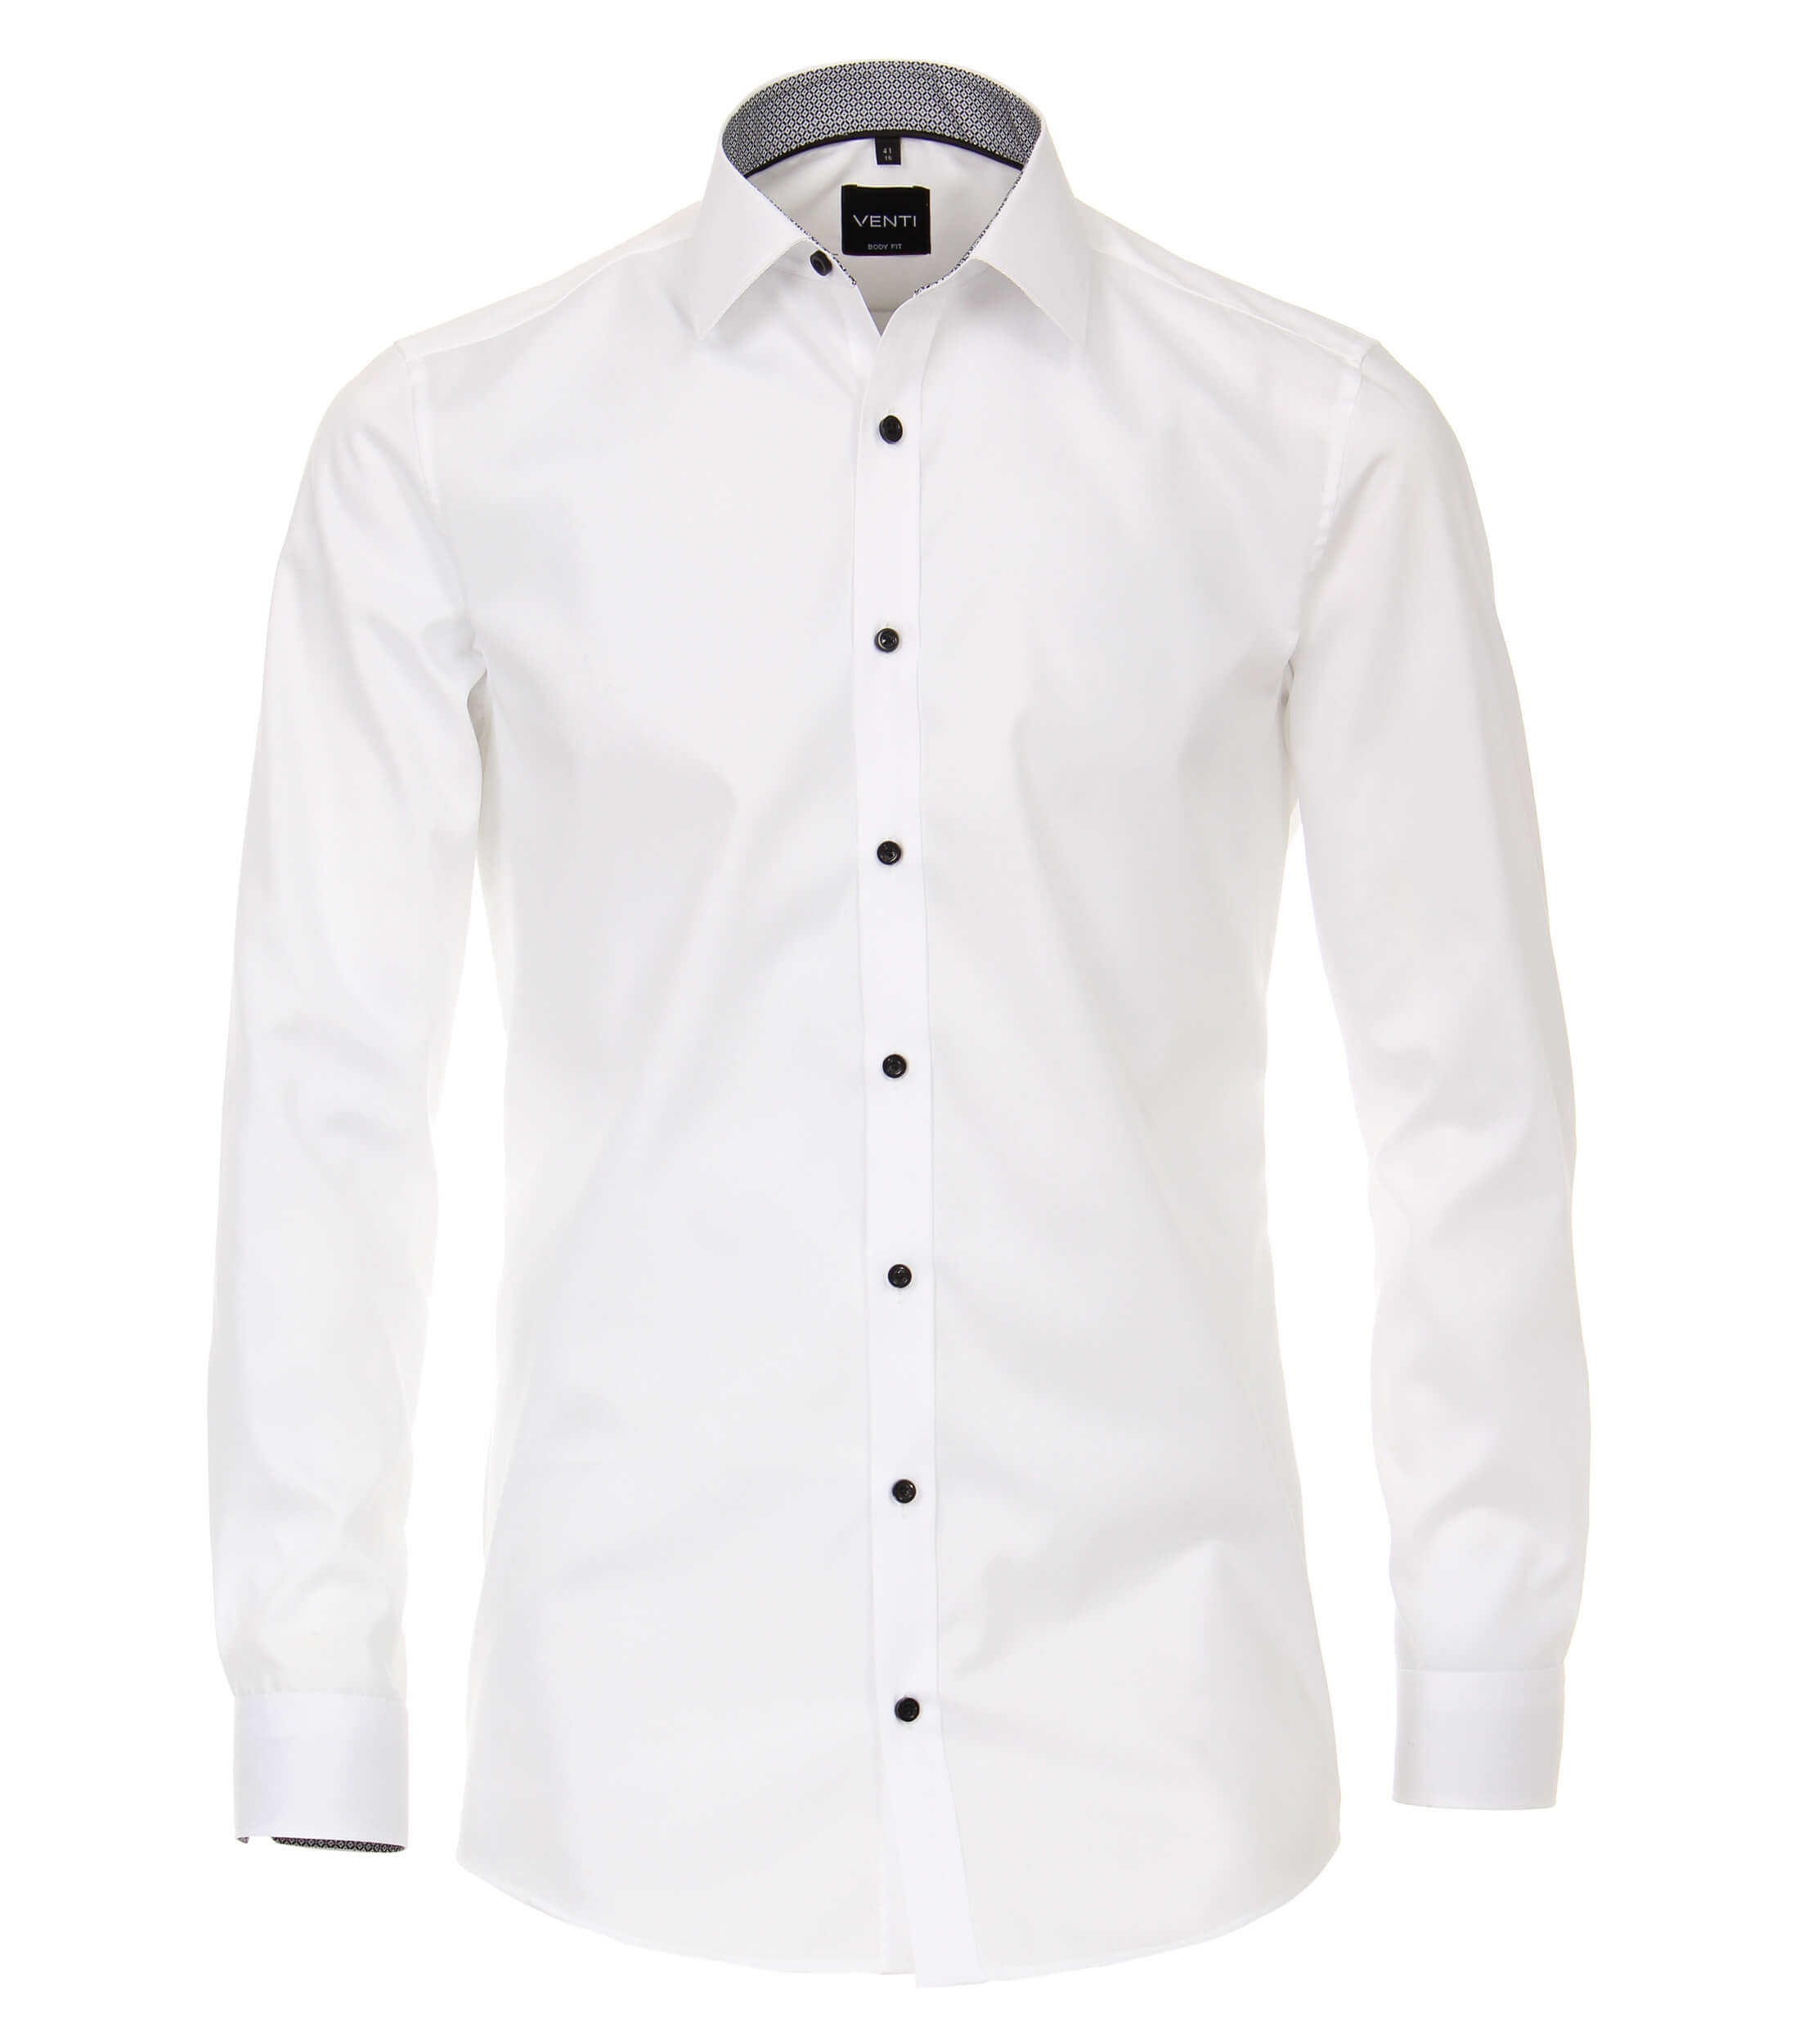 Venti shirt BODY white 193295600-001 |